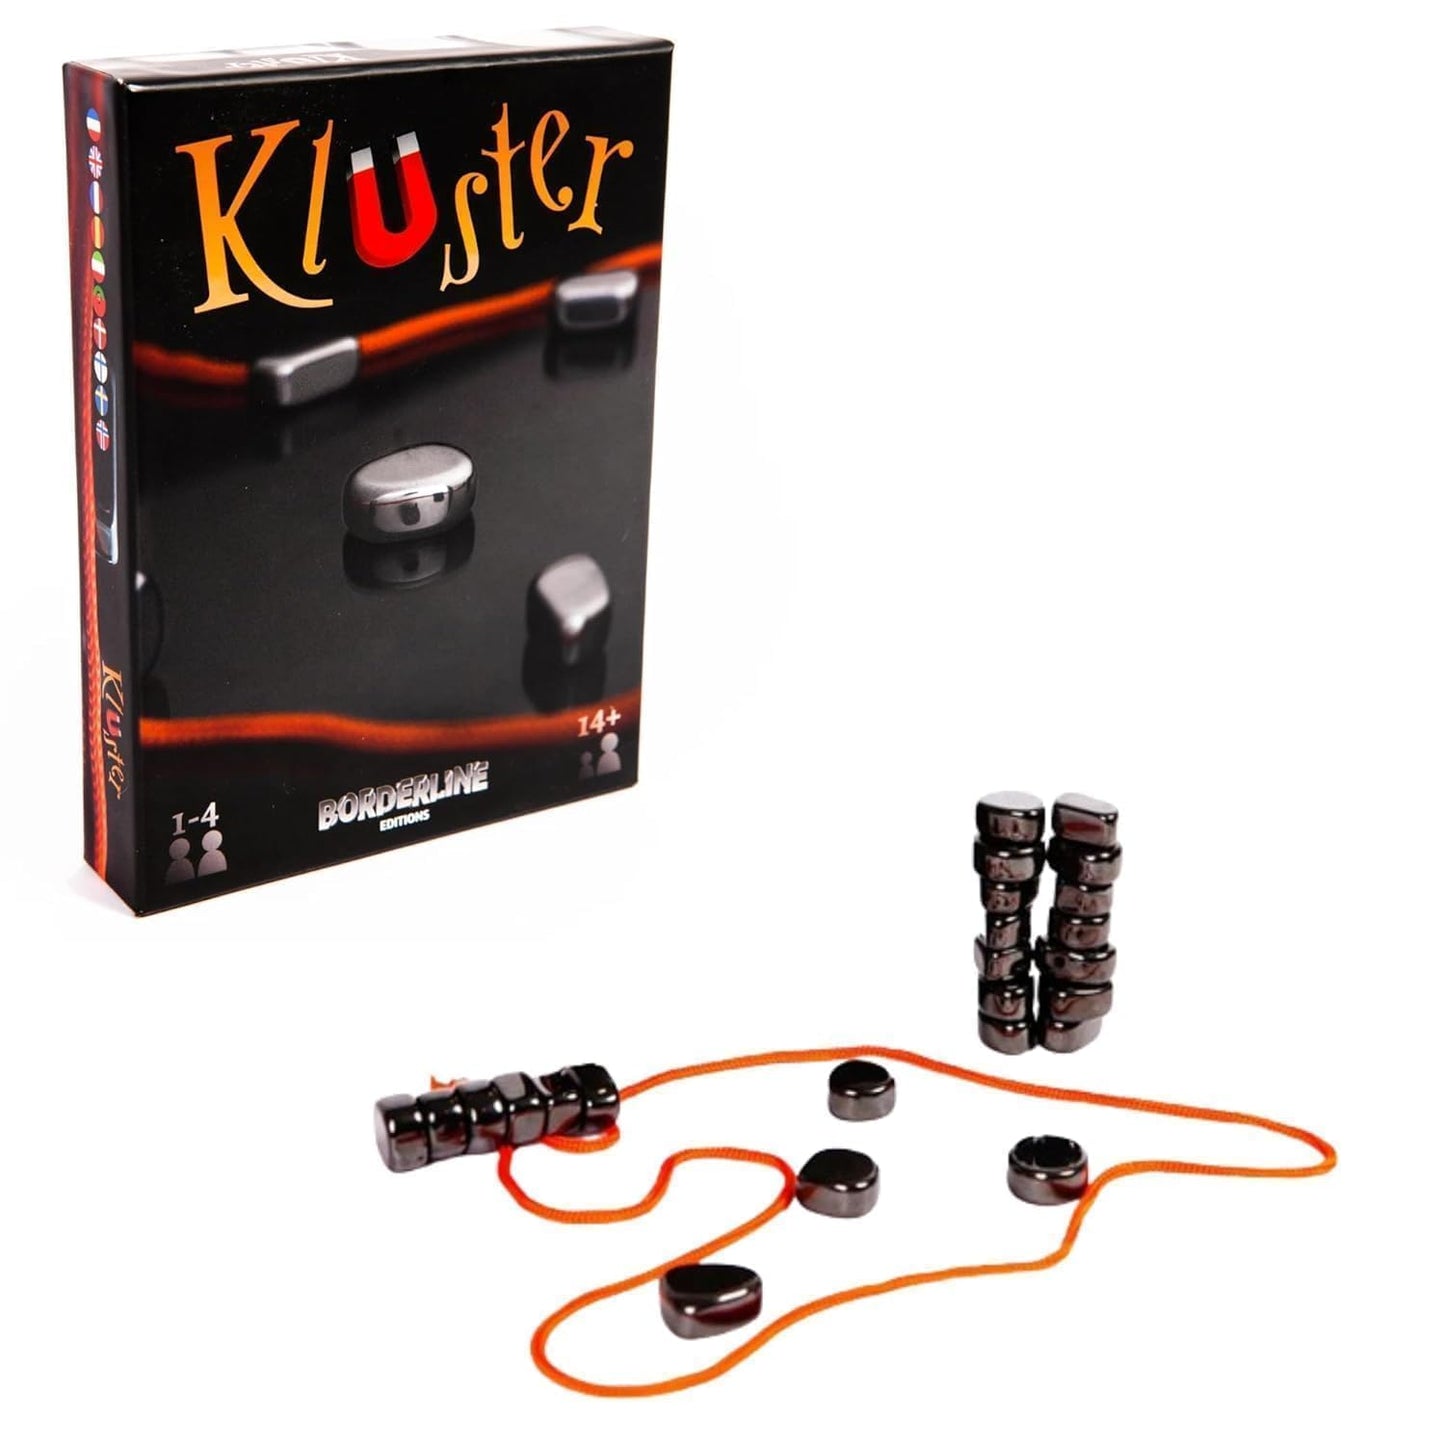 Kluster Magnetic Game